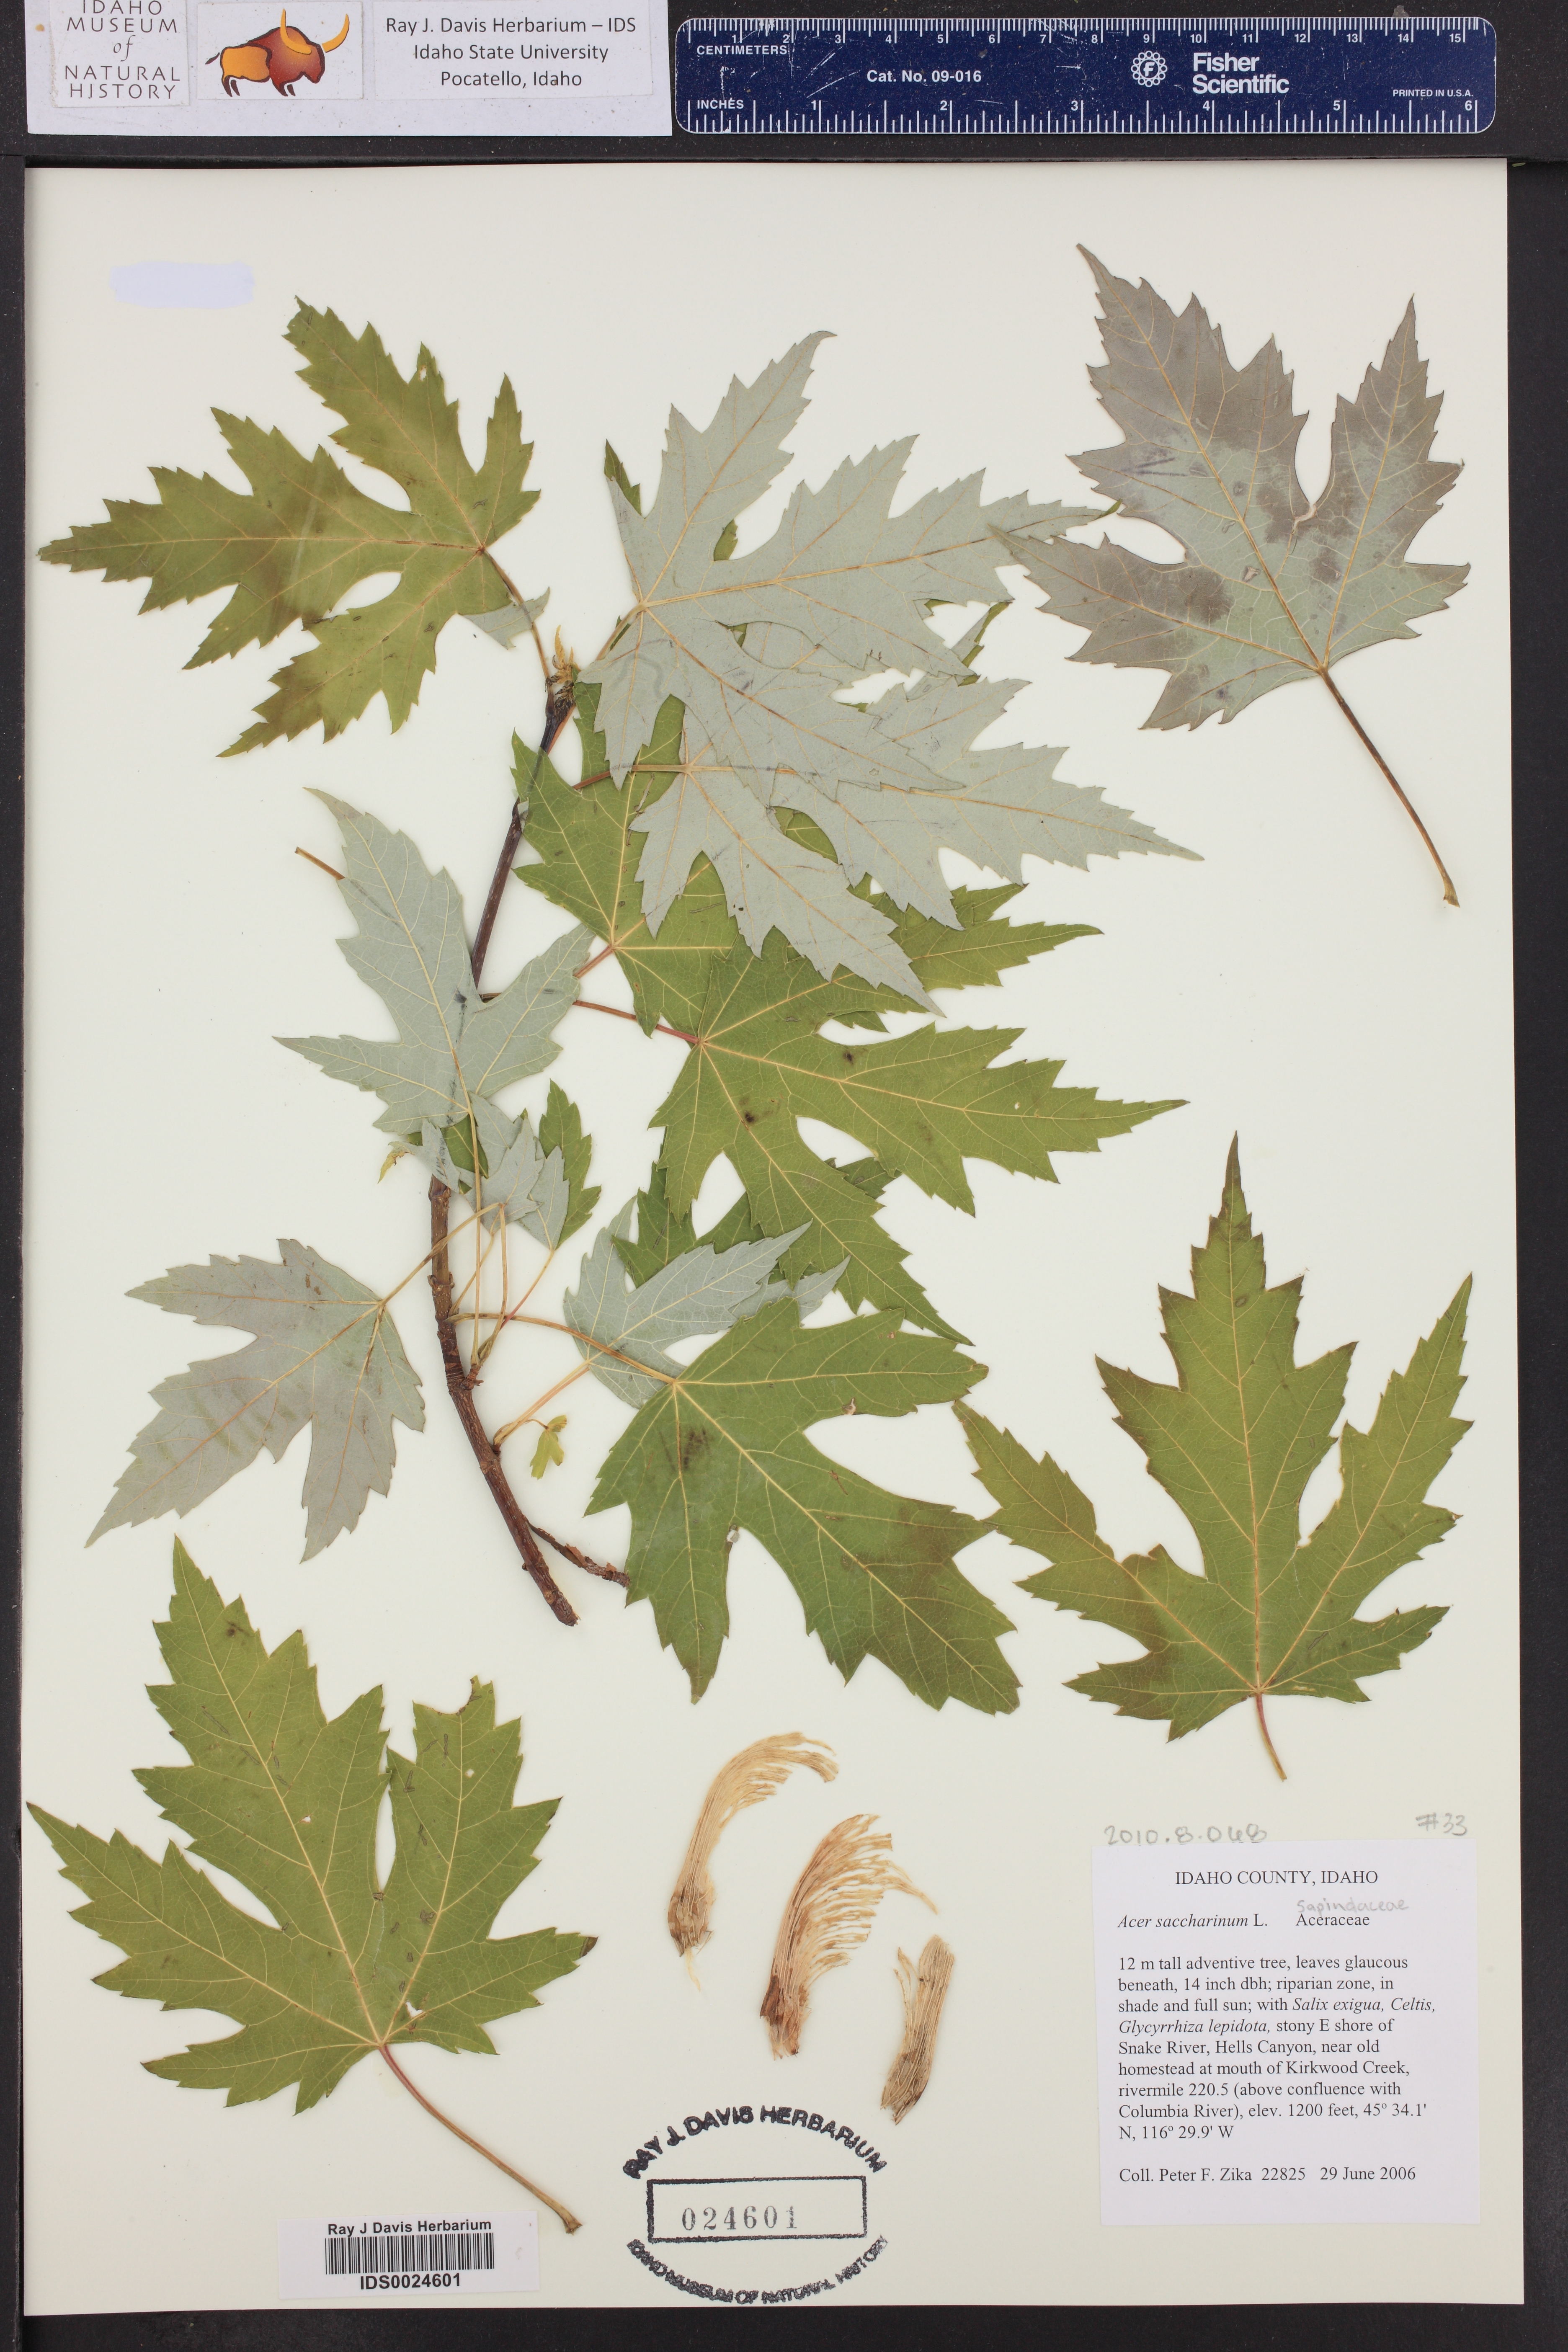 Acer saccharinum ()